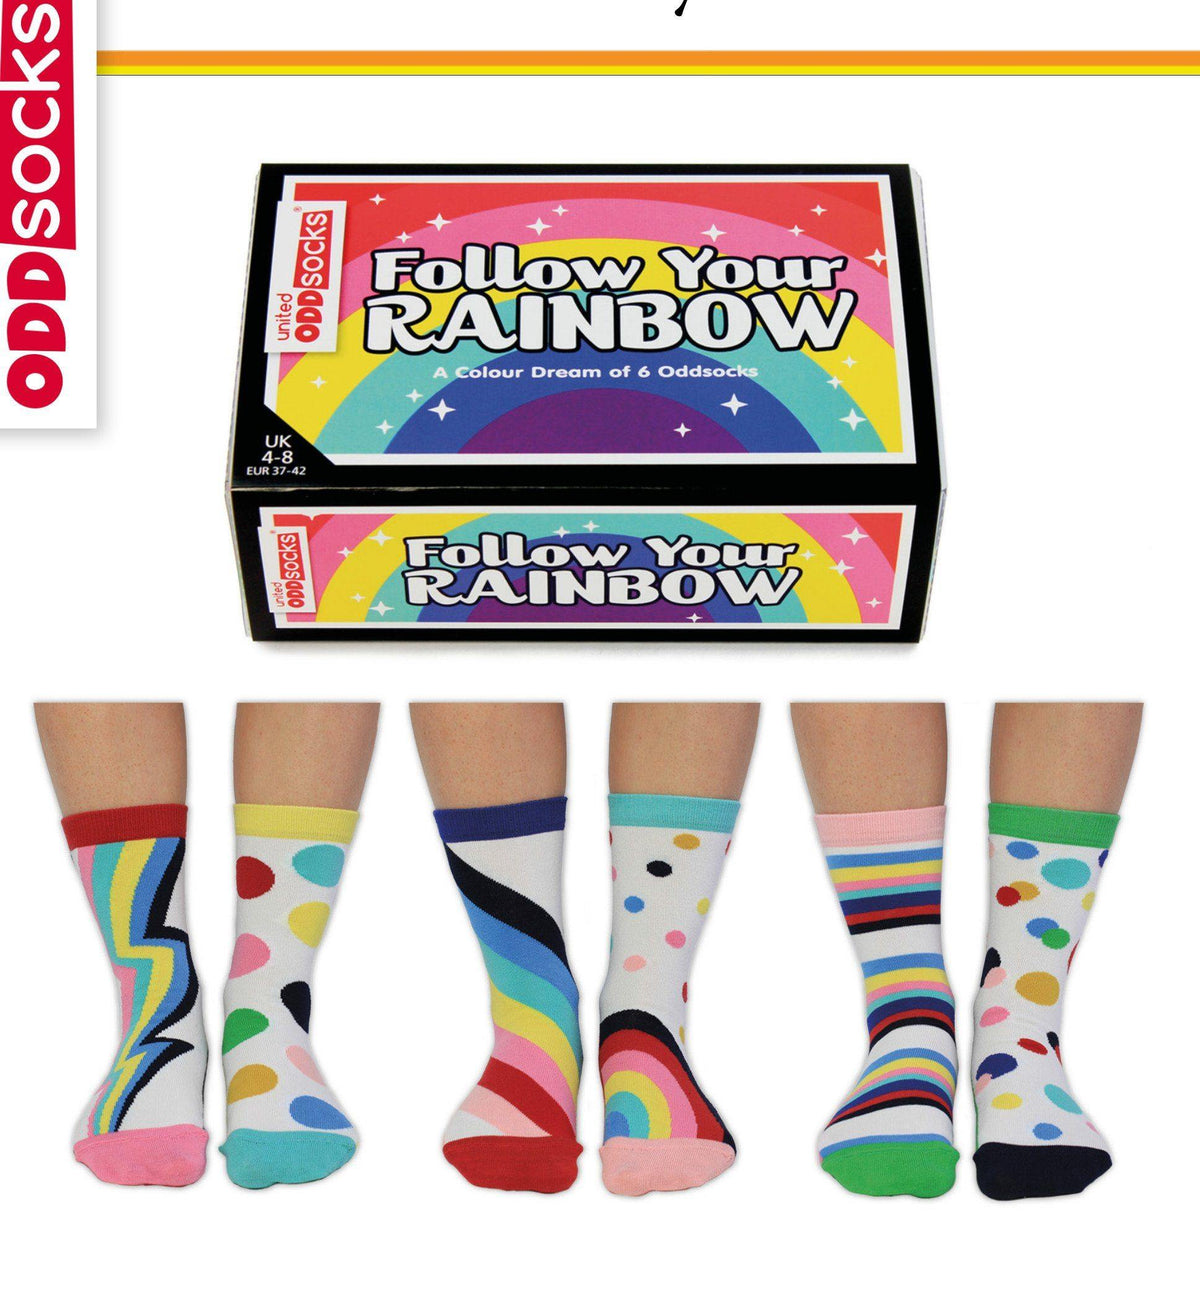 Follow Your Rainbow Socks Foxyavenue UK